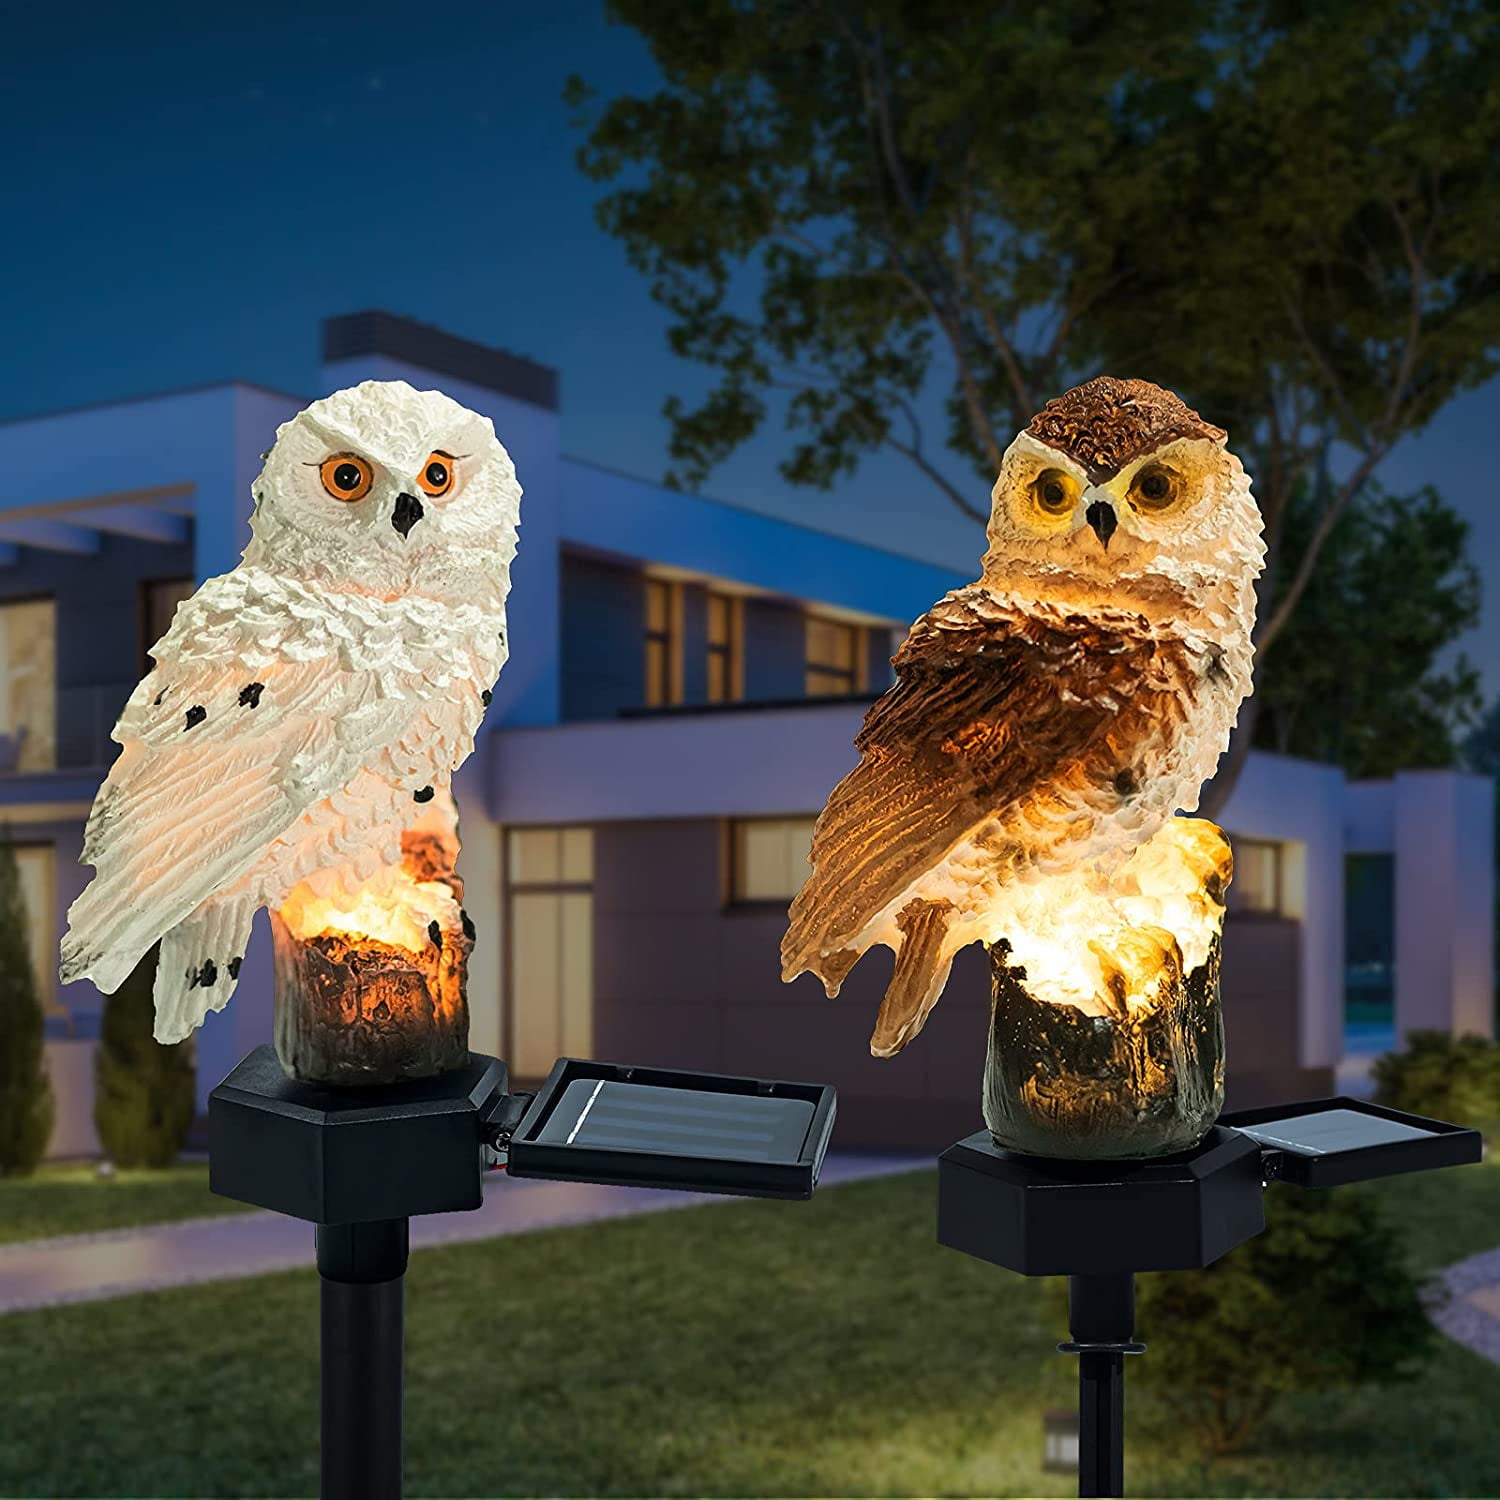 LED SOLAR OWL ORNAMENT ANIMAL BIRD LIGHTS OUTDOOR GARDEN PATHWAY LAMP *US STOCK* 